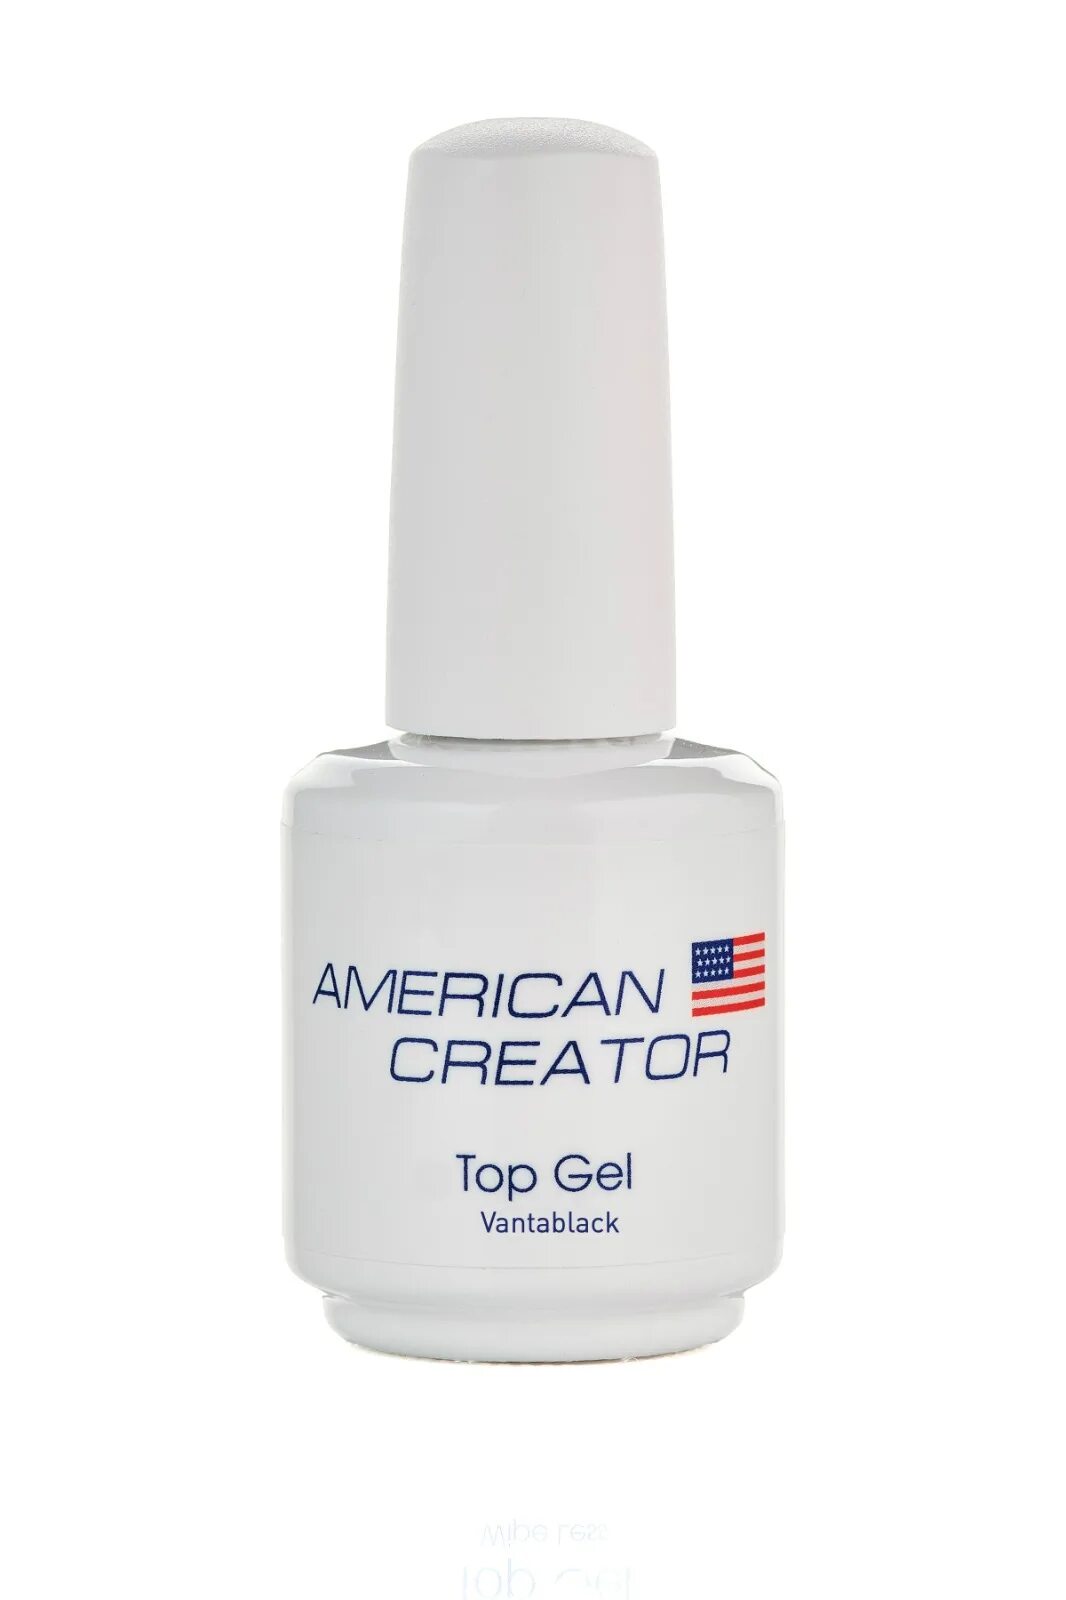 База American creator Base Gel. Гель база mild Американ. База для ногтей Американ креатор. Гель для ногтей American creator.